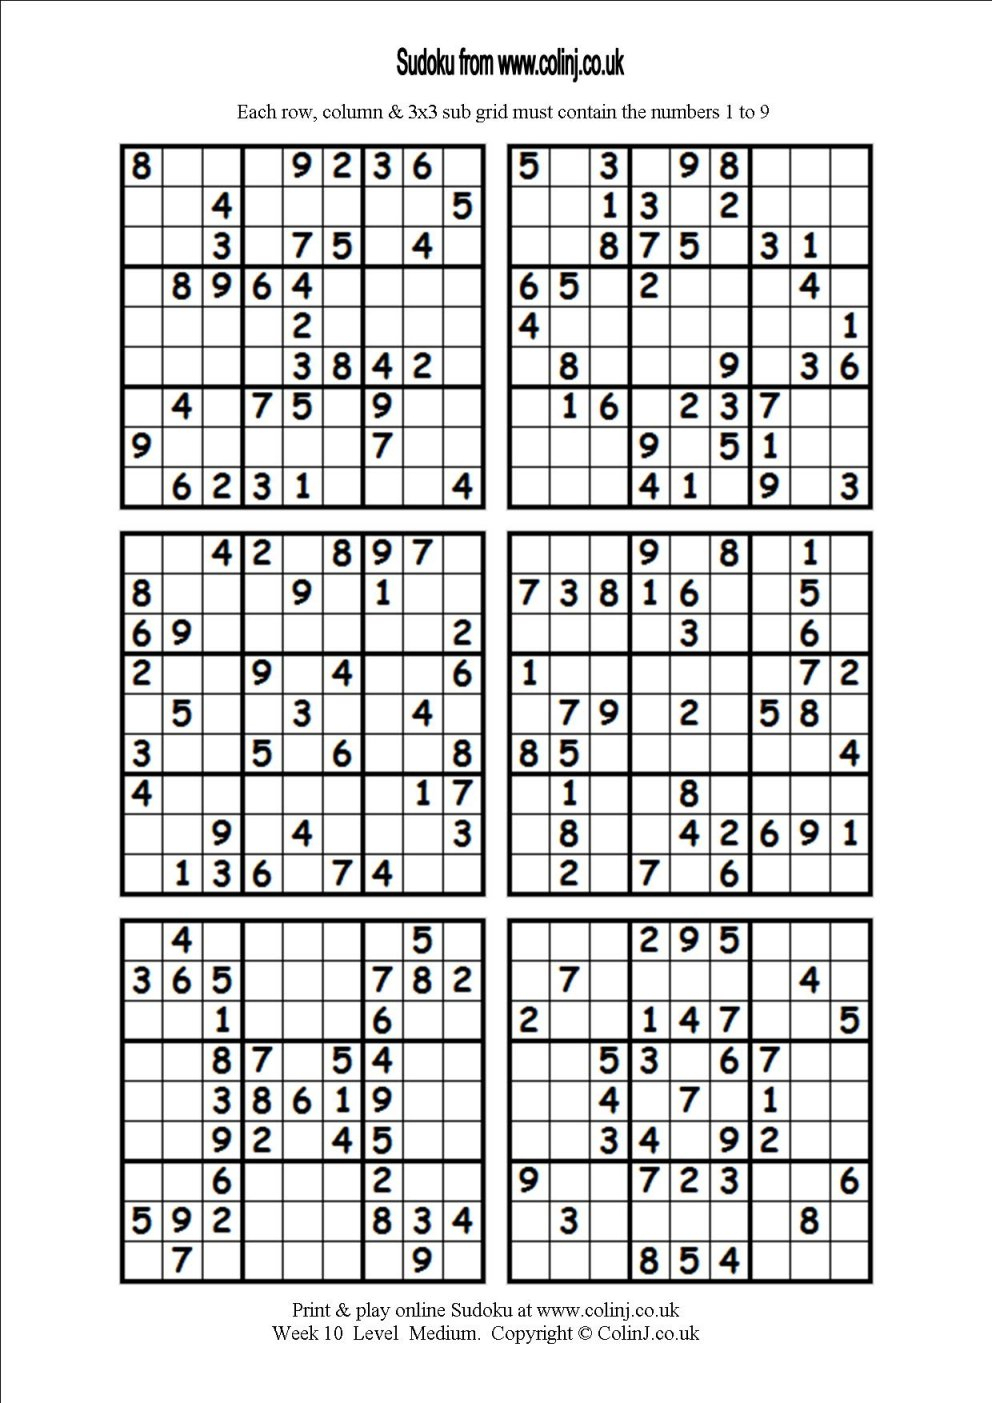 Sudoku Puzzles Org Printables 6